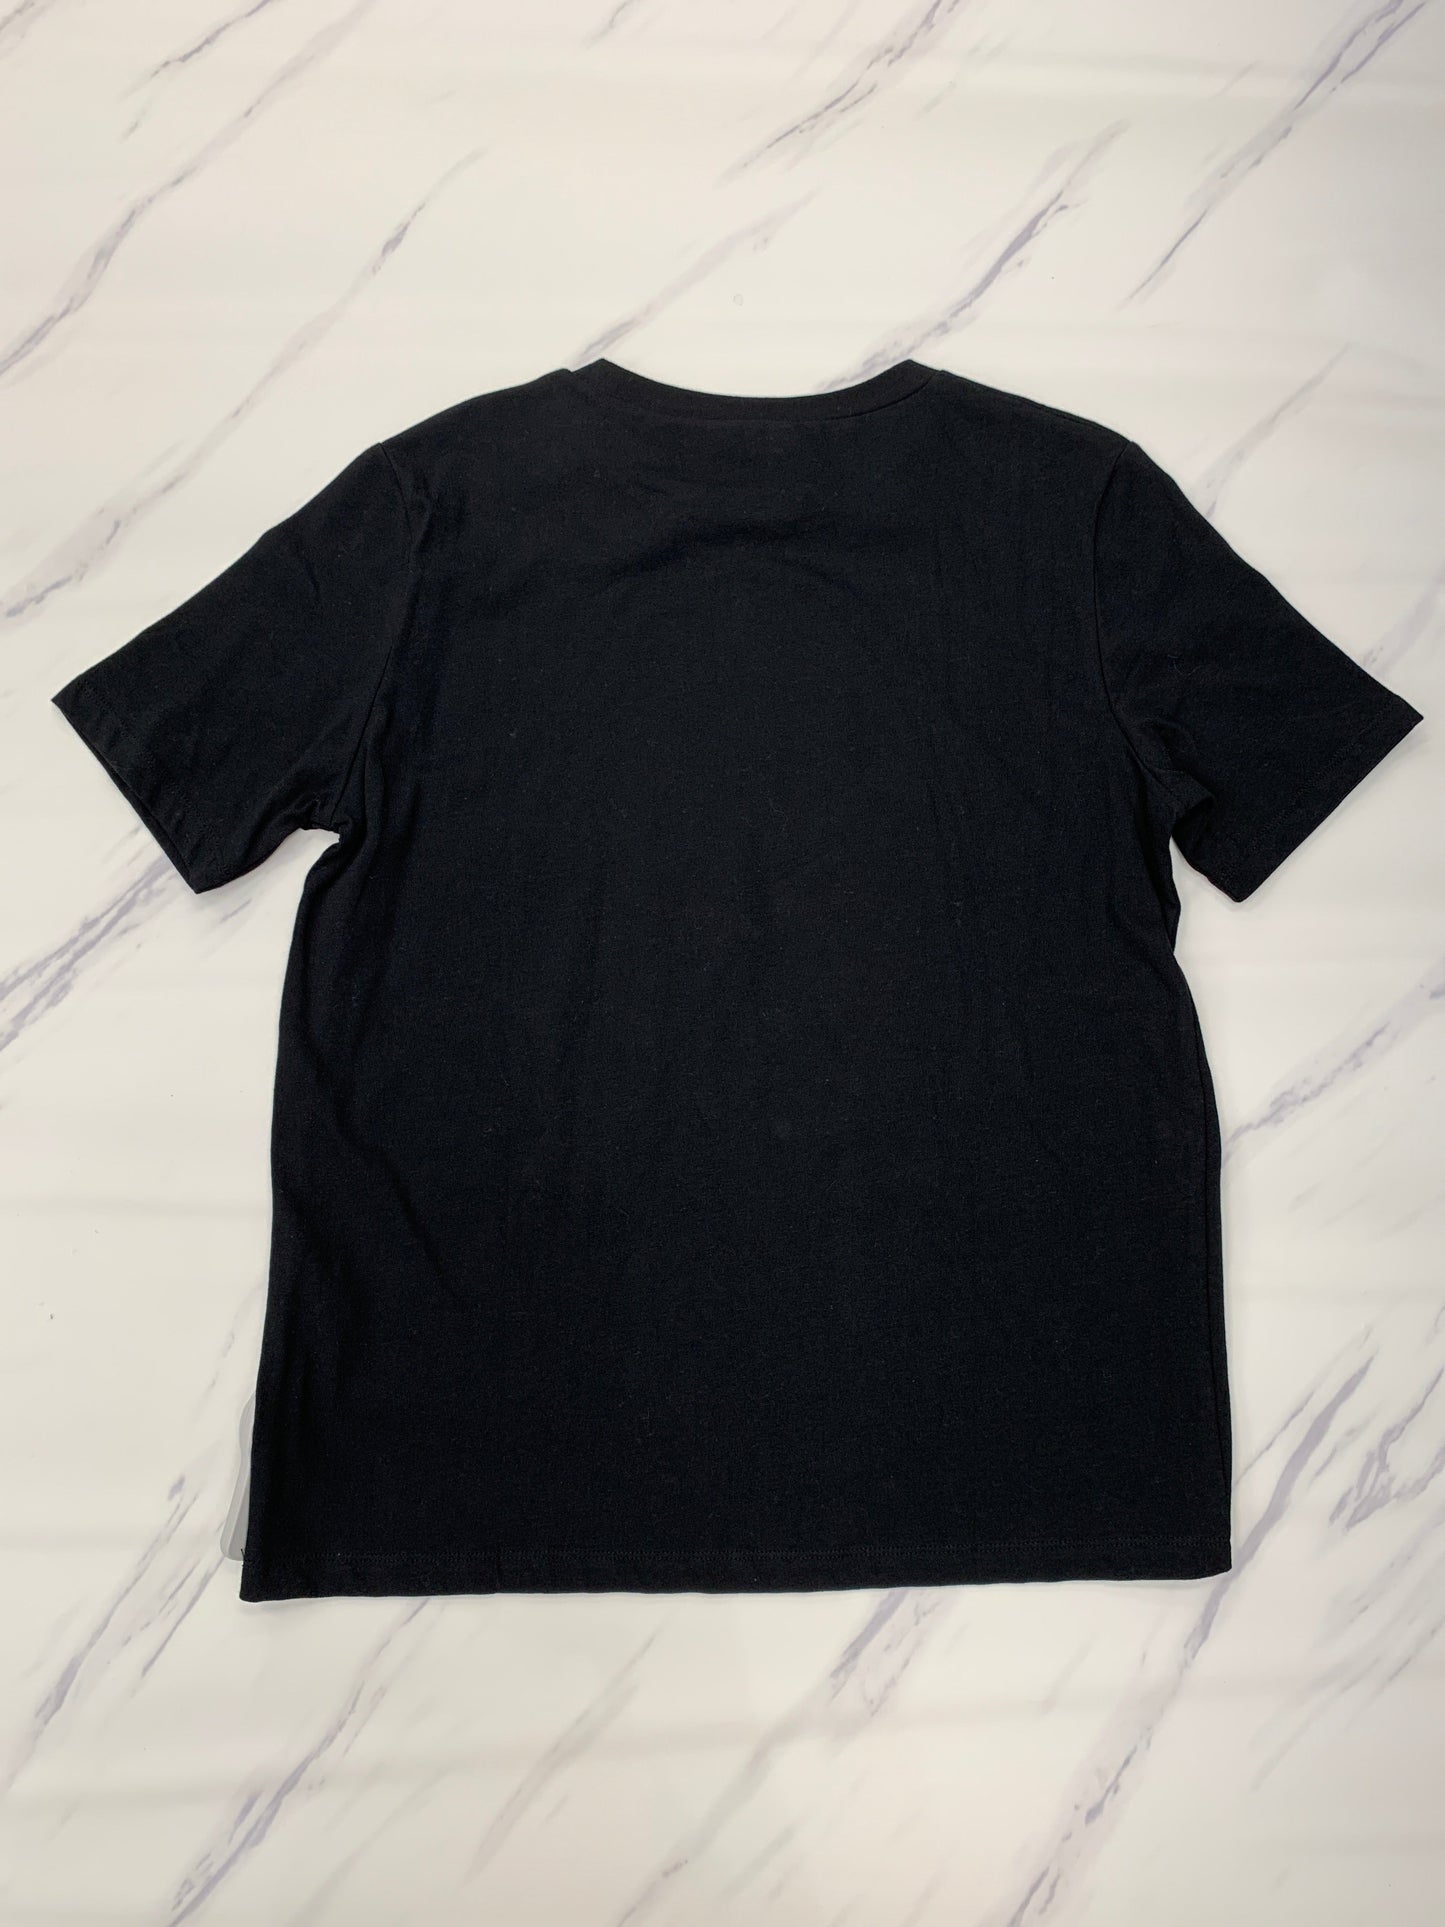 Black Top Short Sleeve Zara, Size S